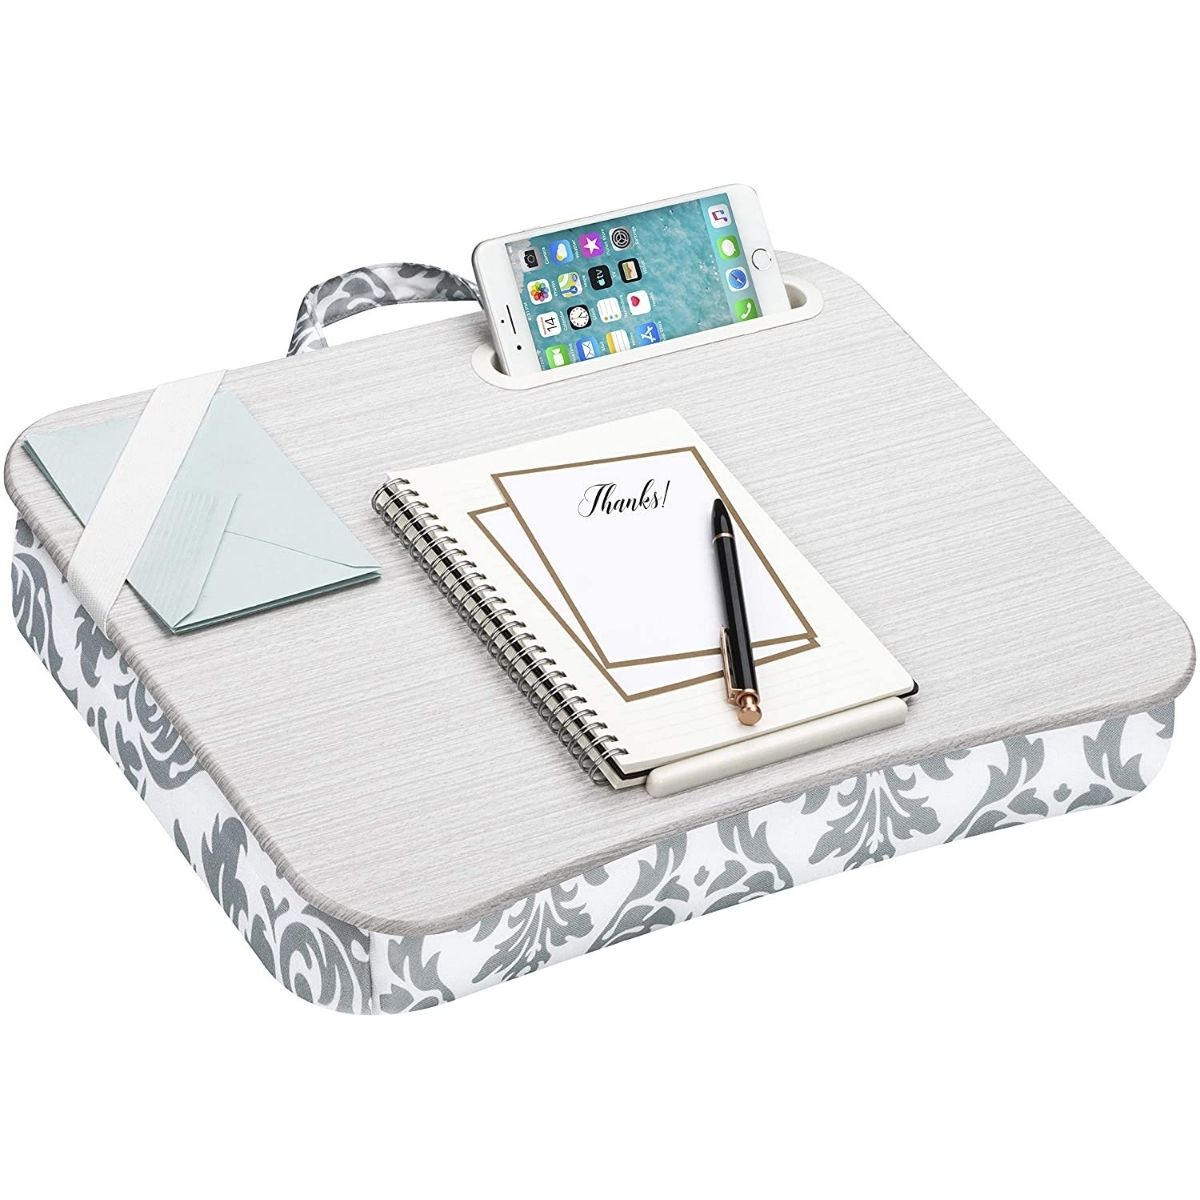 The Best Home Office Gifts Option: LapGear Designer Lap Desk